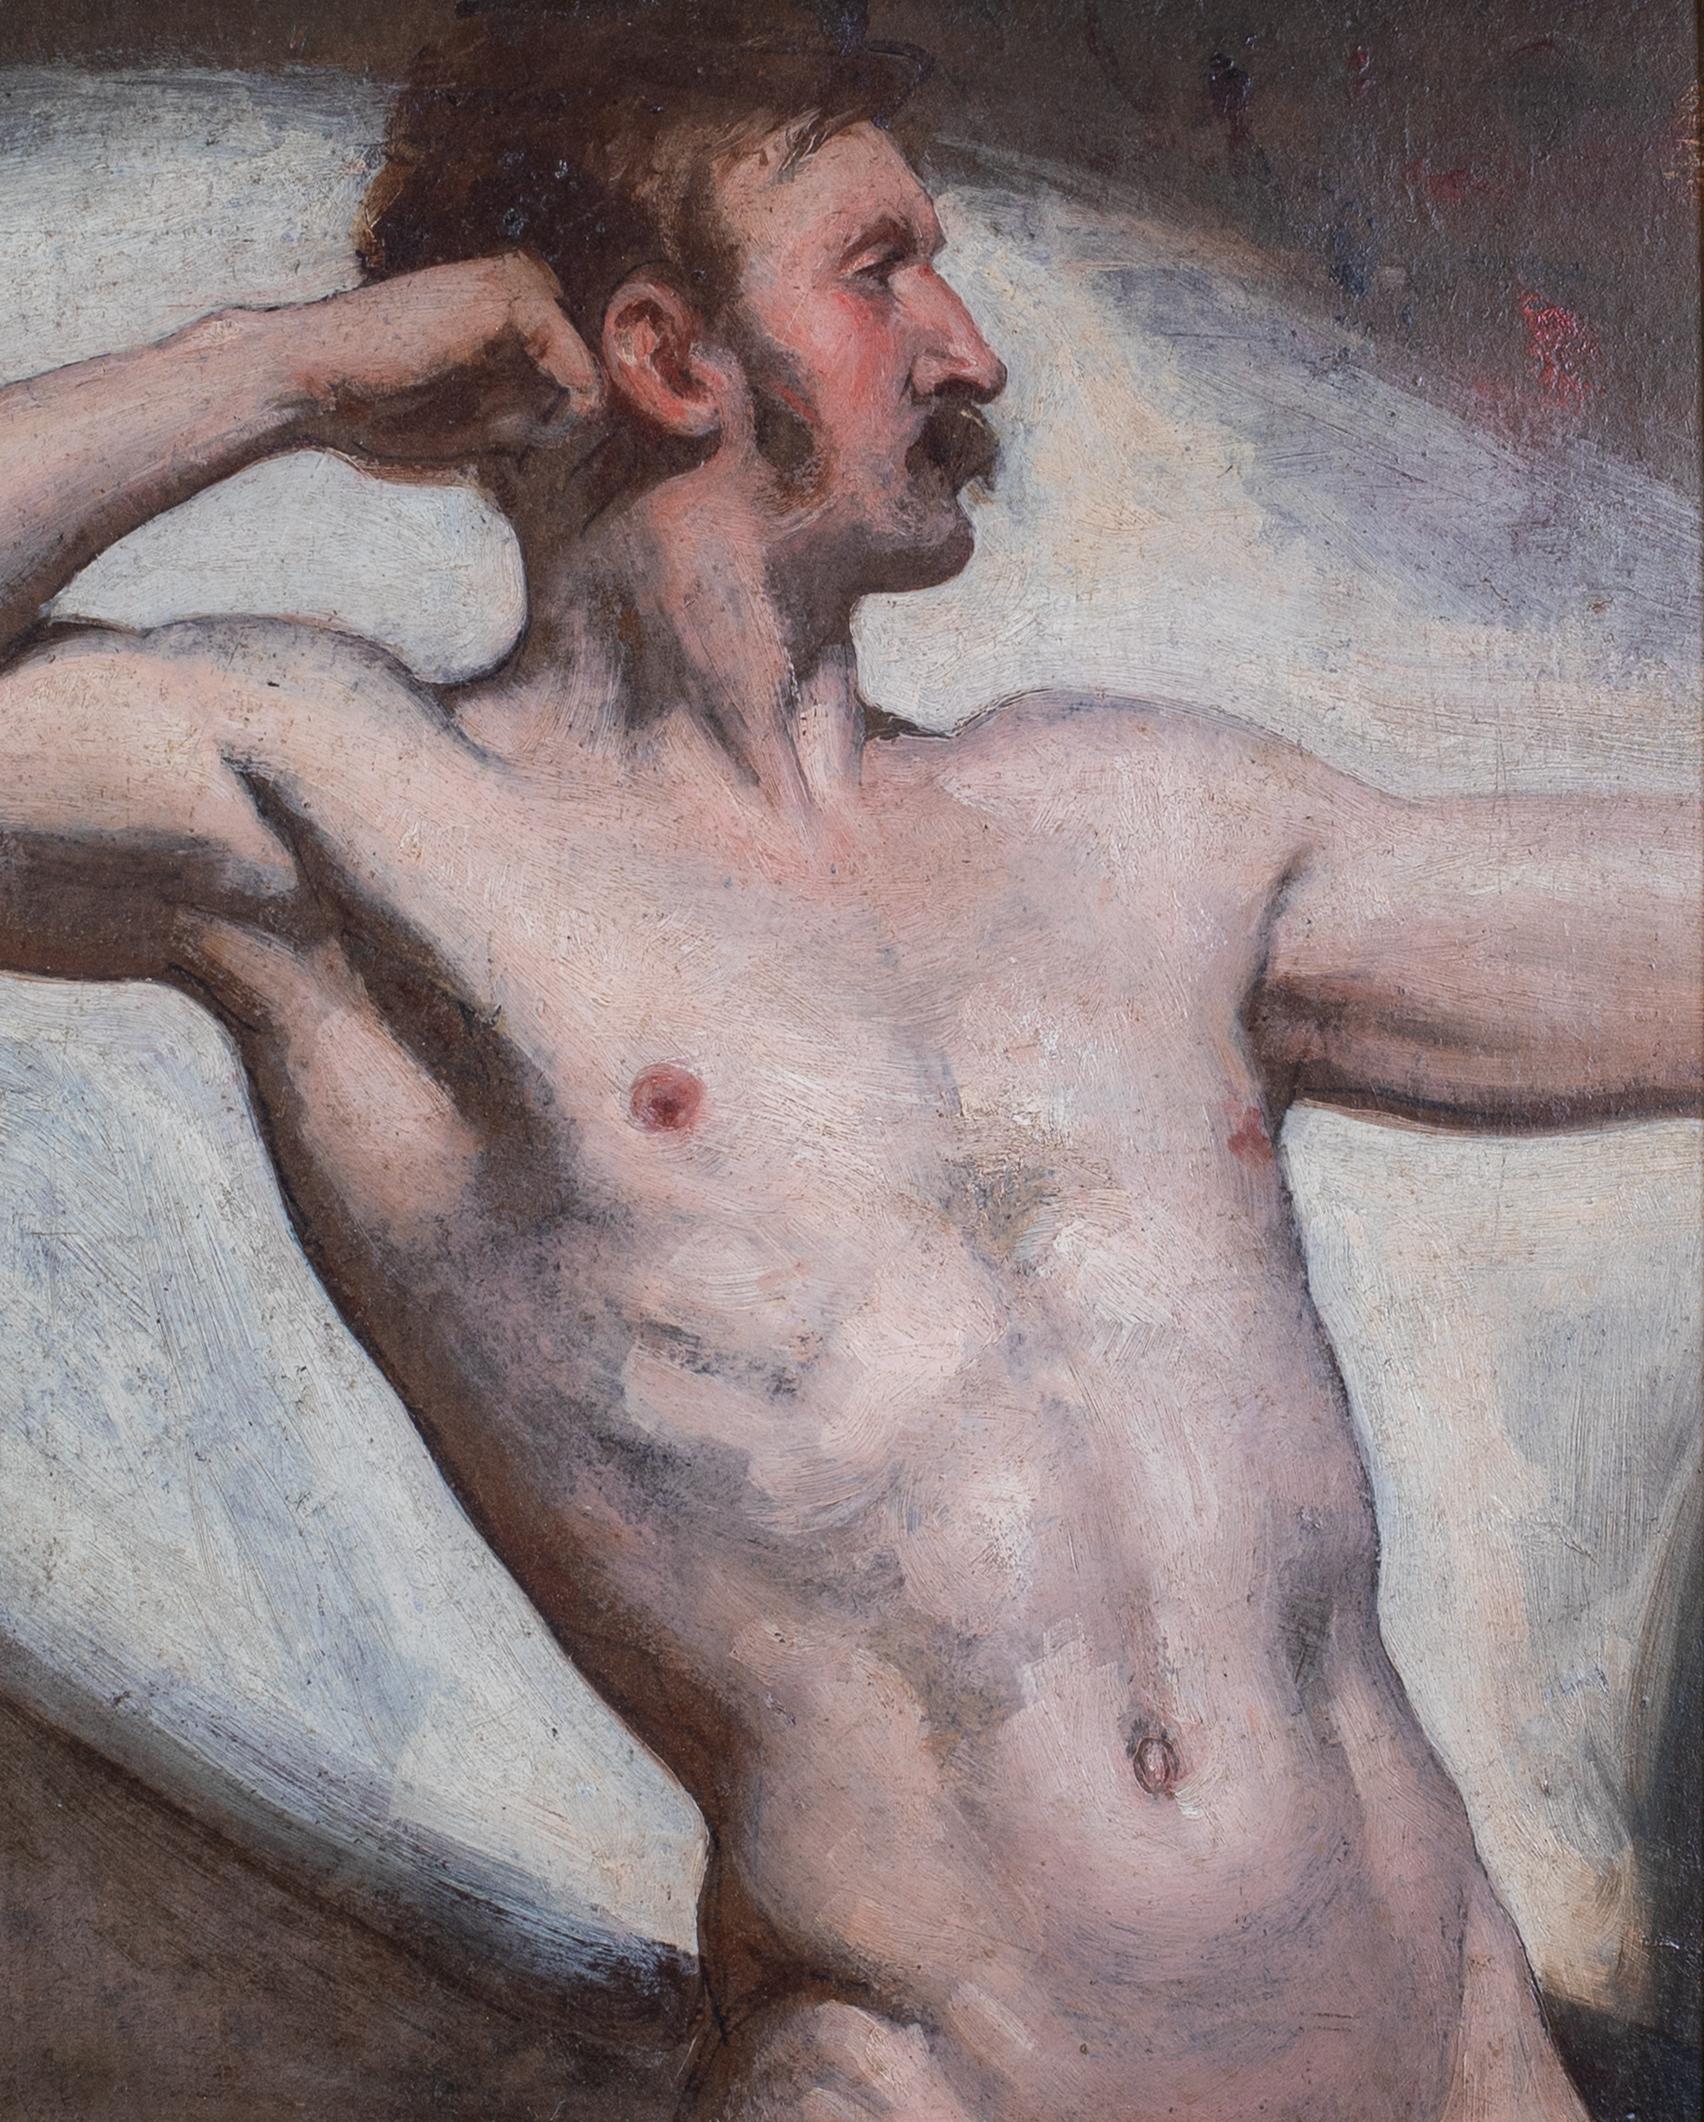 Nude Male Posing As An Archer, 19th Century  Daniel MACLISE (1806-1870) 3